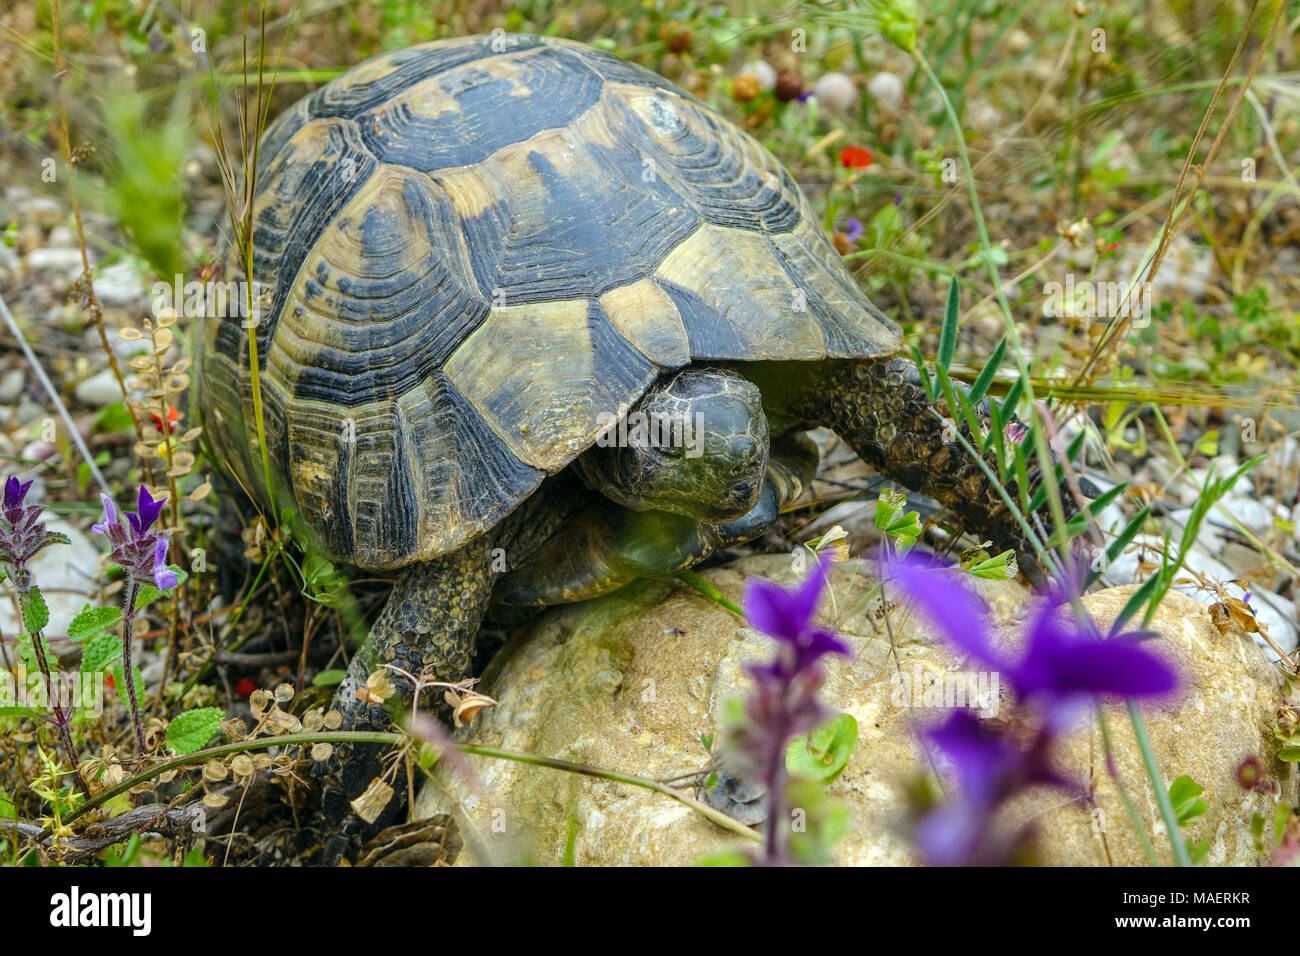 Testuggine comune (Testudo graeca) tartaruga greca, o sperone-thighed tortoise amongs tgrass e fiori Foto Stock